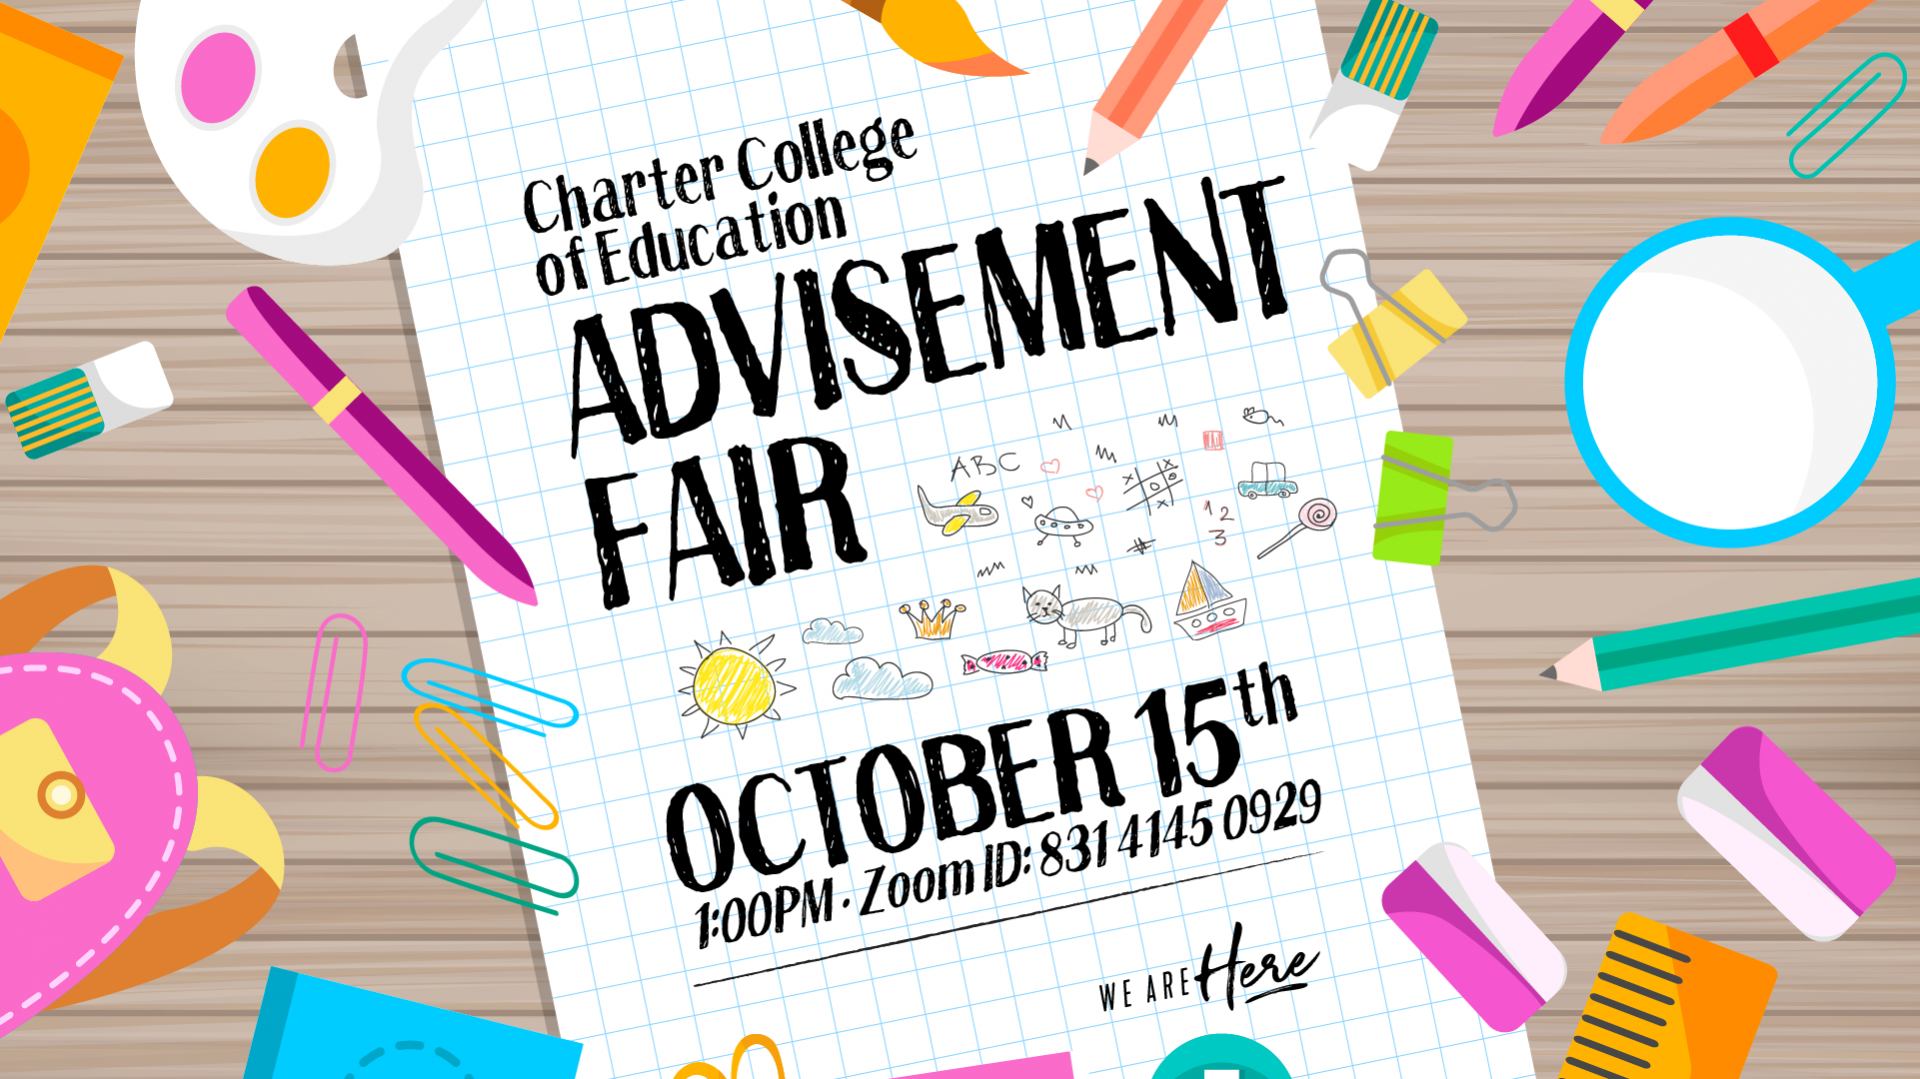 Charter College of Education: Advisement Fair